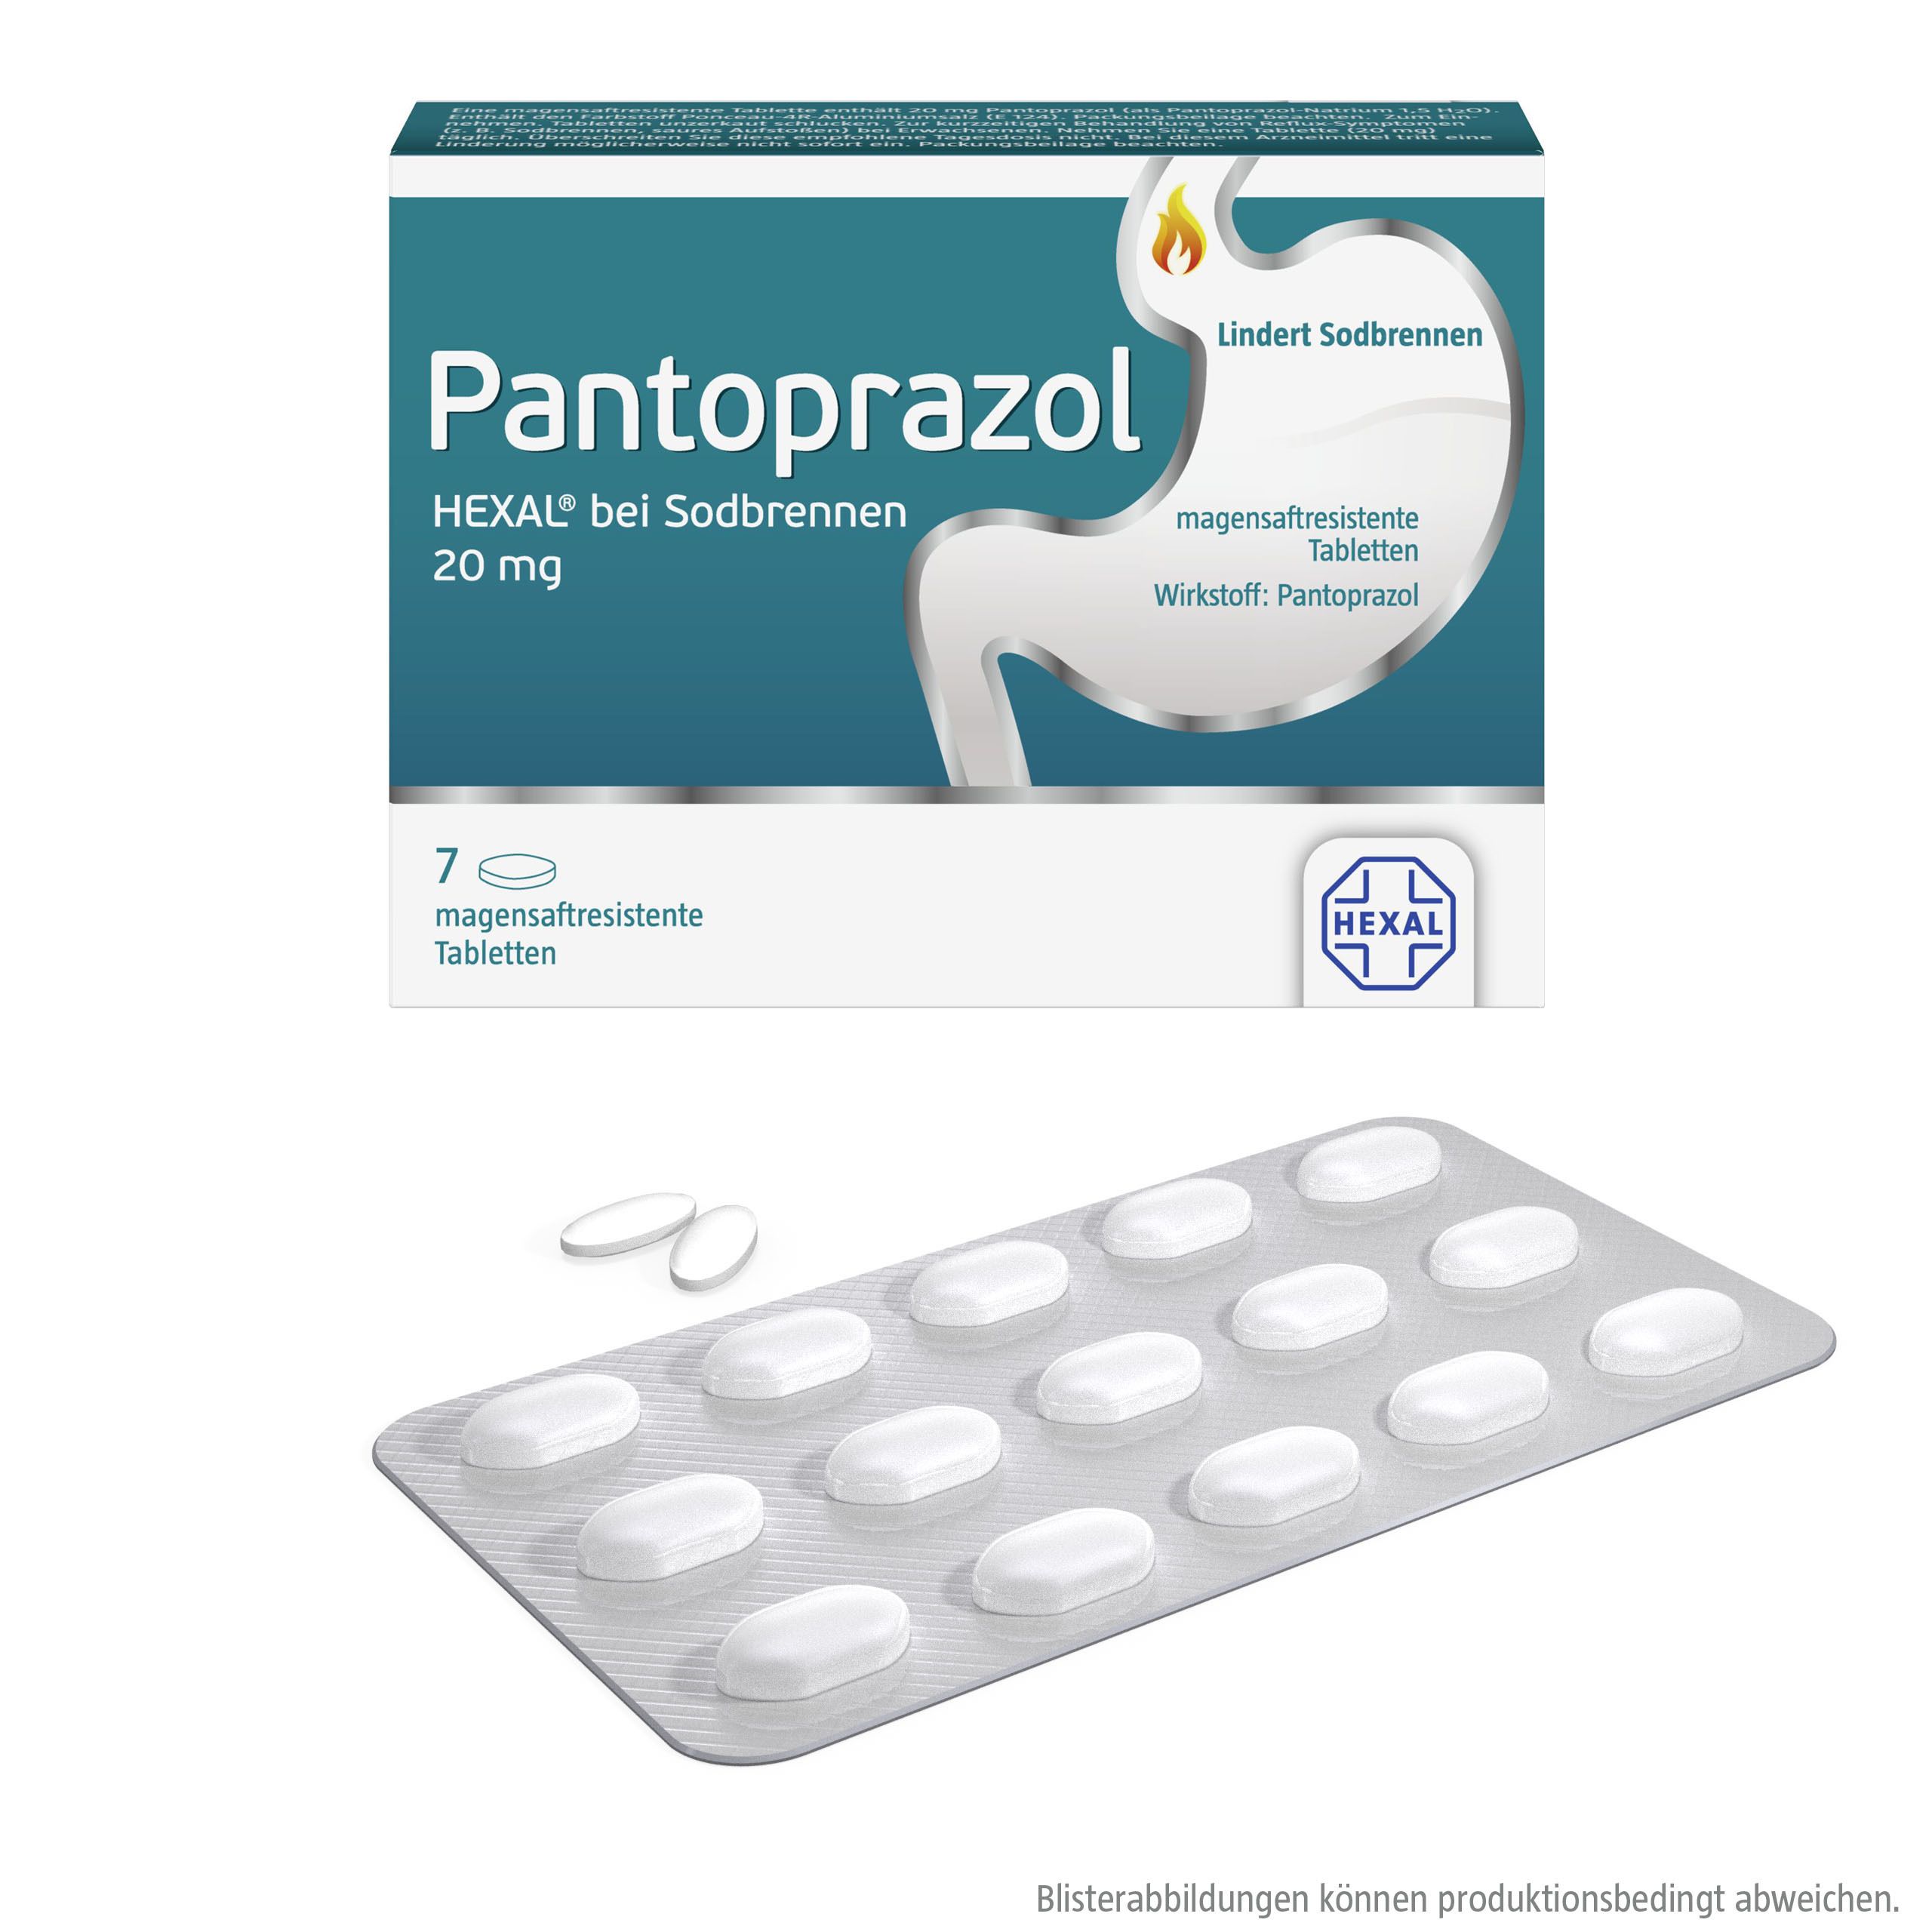 Pantoprazol Hexal® Tabletten bei Sodbrennen